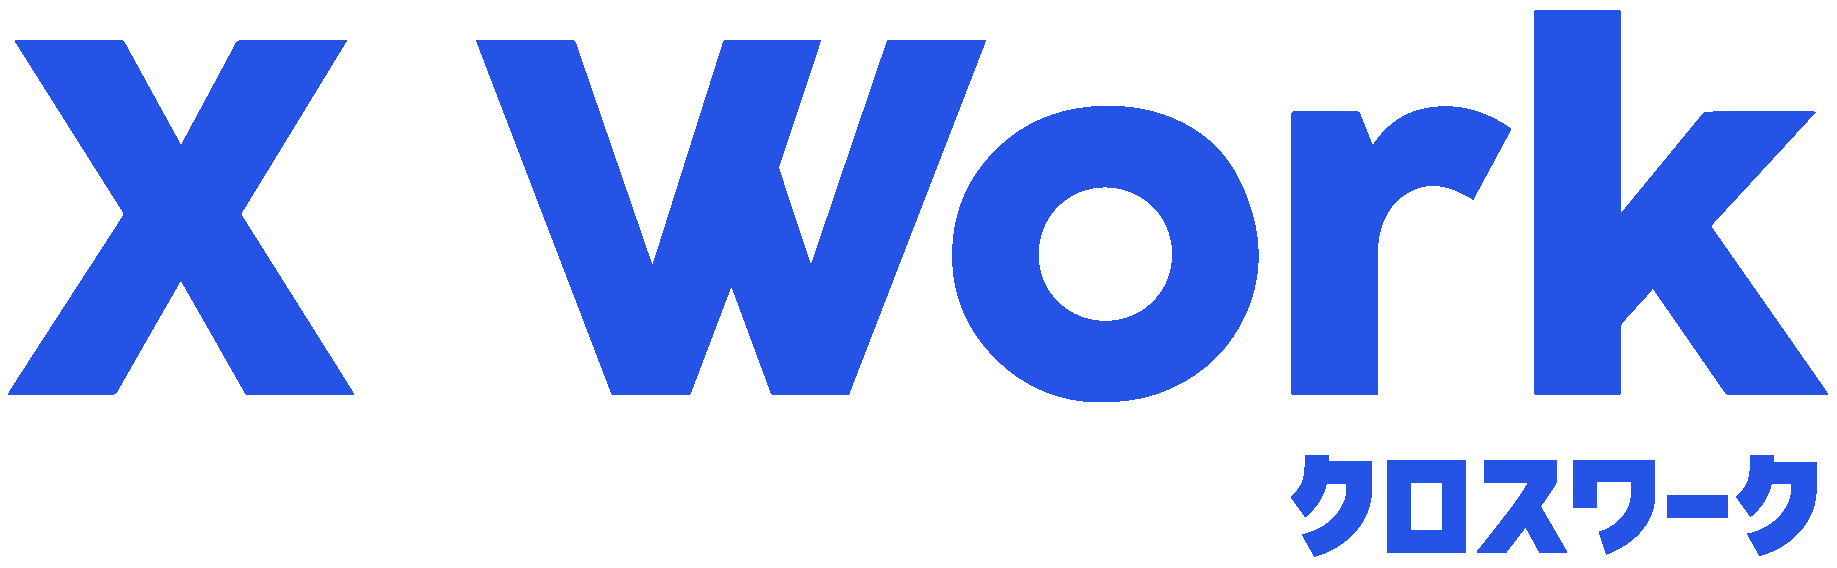 X Work logo